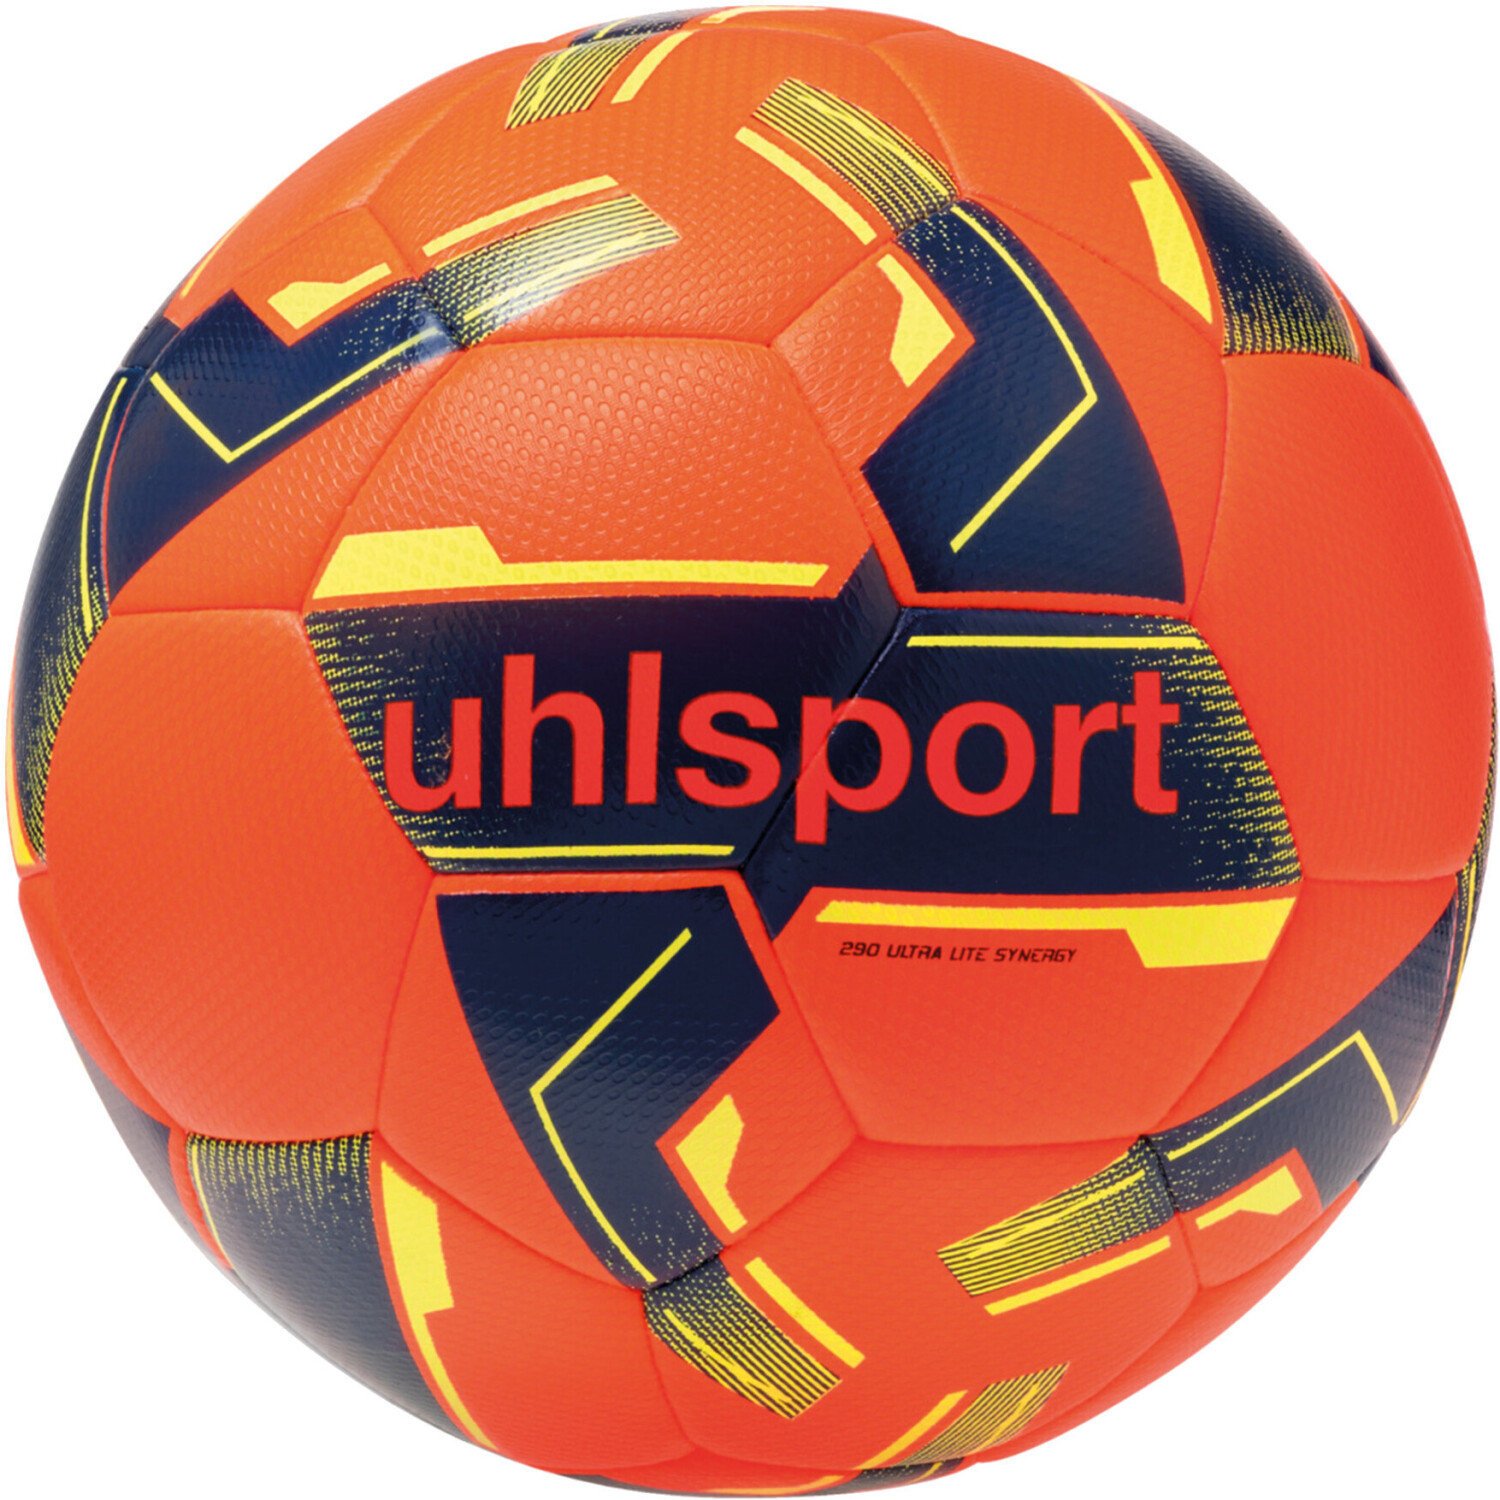 Photos - Football Uhlsport Ultra Lite Synergy 290g fluo orange (4) 